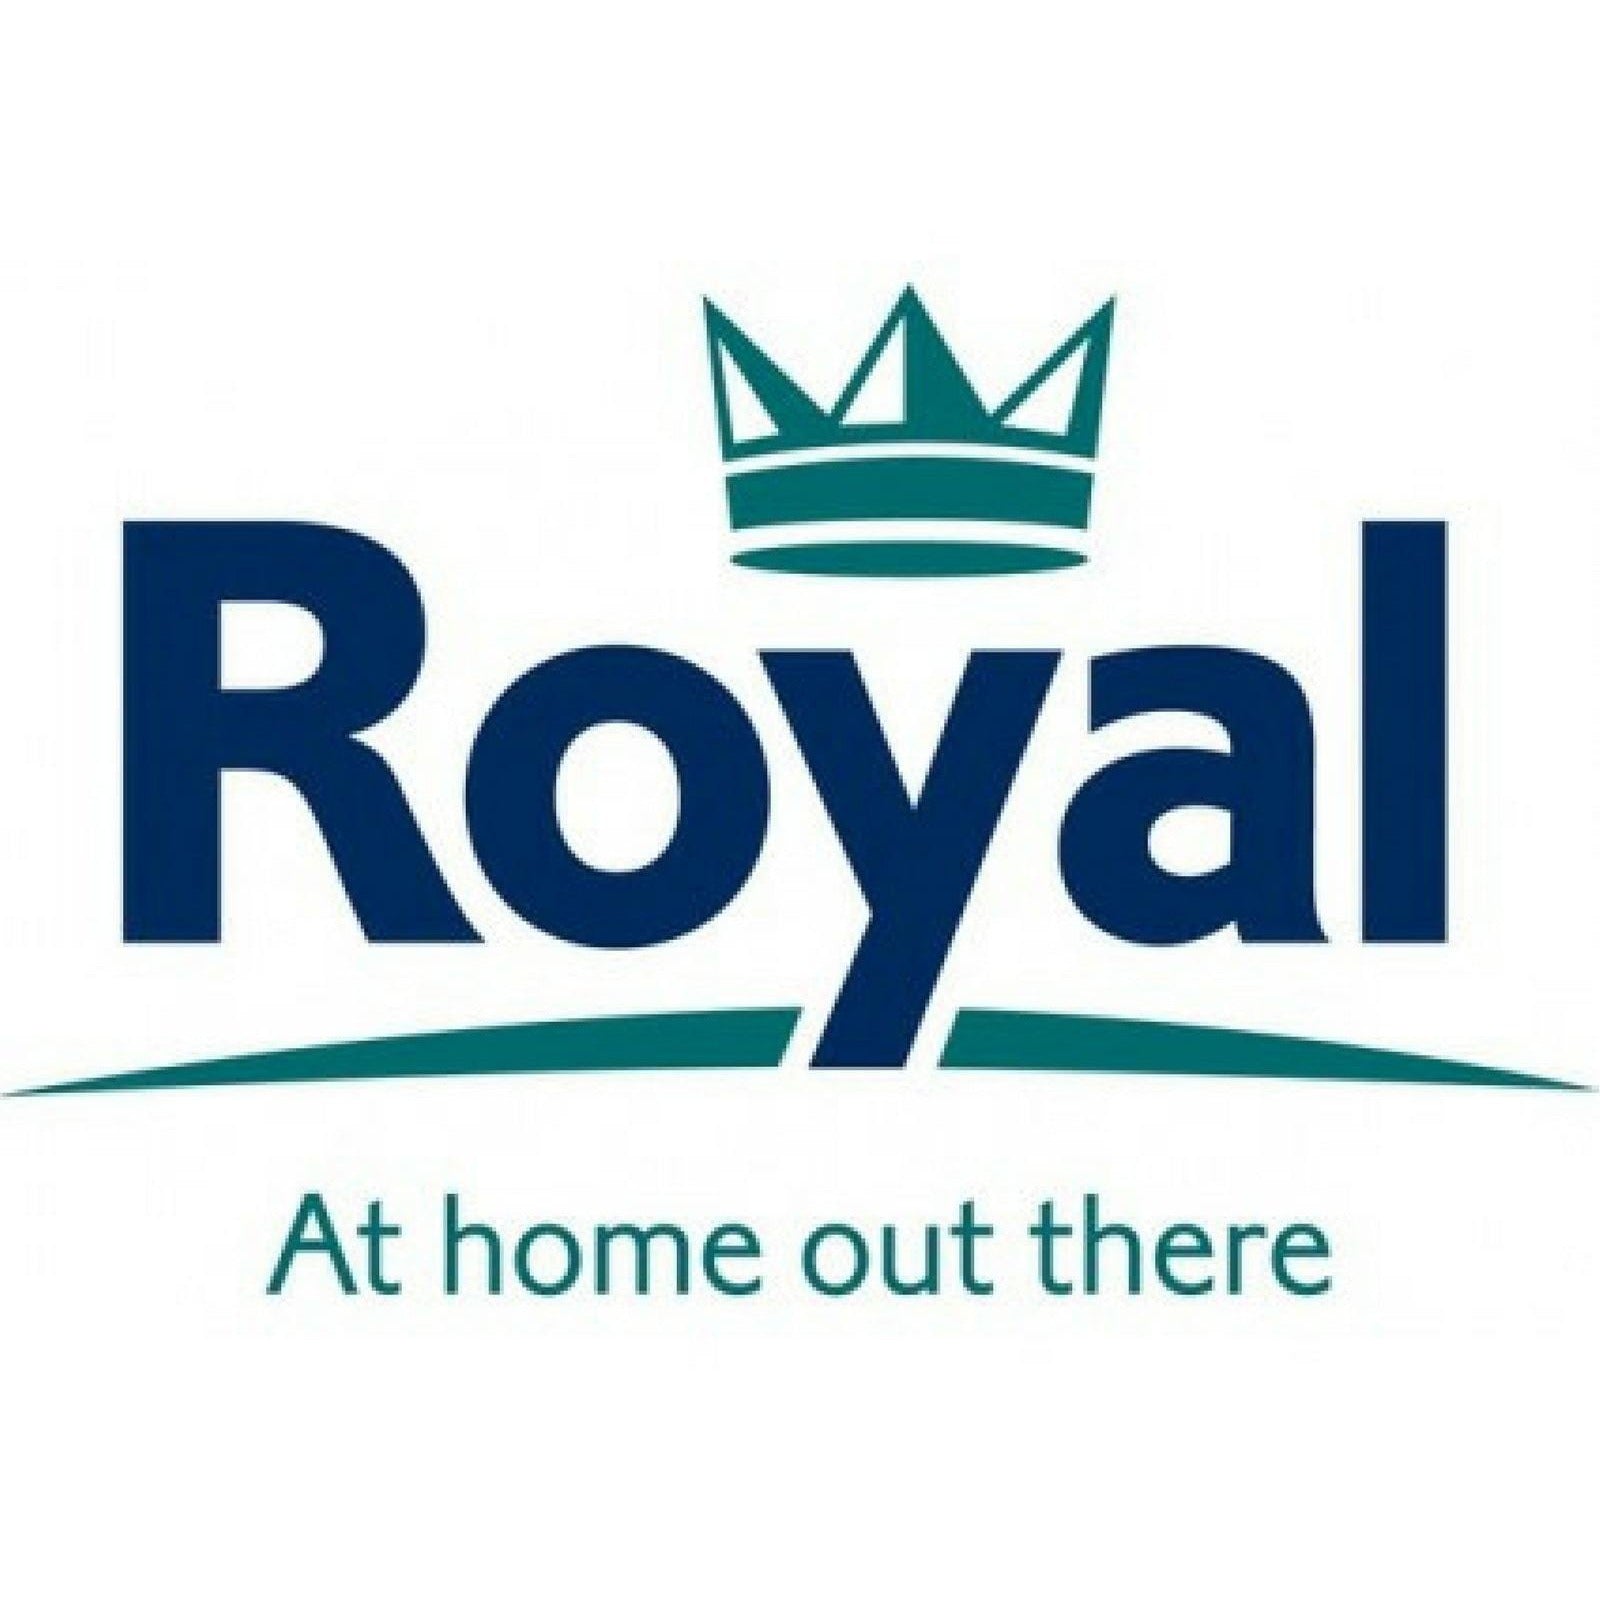 Royal Oxhill 390 - Blue Awning 302628 - Quality Caravan Awnings